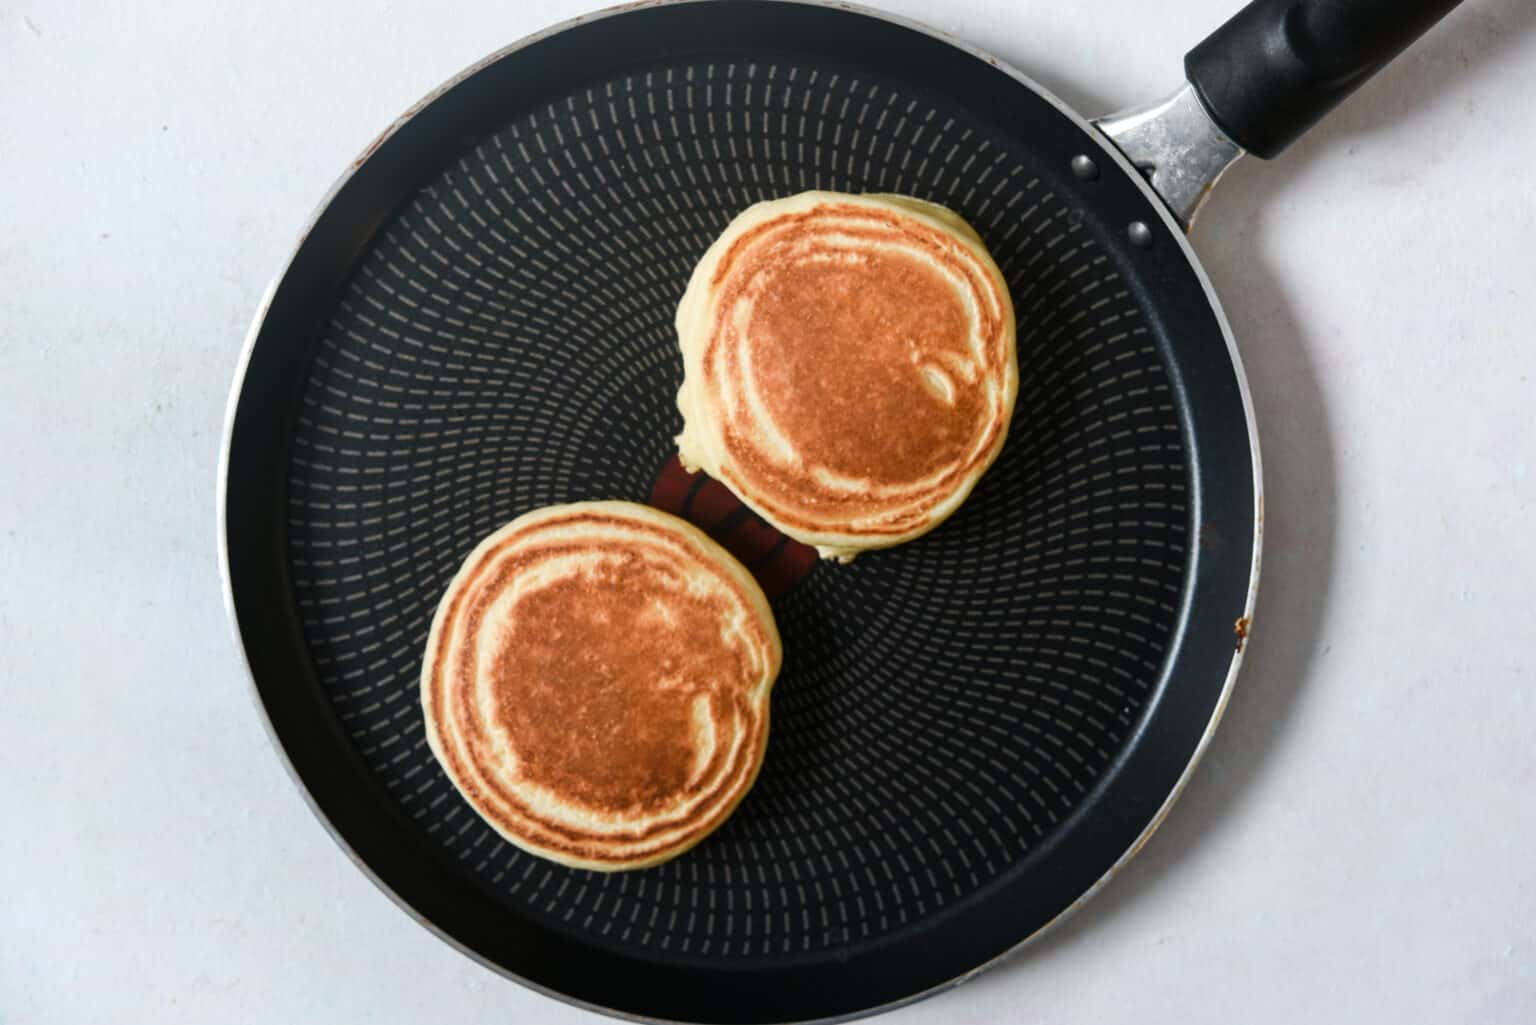 5 Ingredient Keto Pancakes With Almond Flour - Oh So Foodie